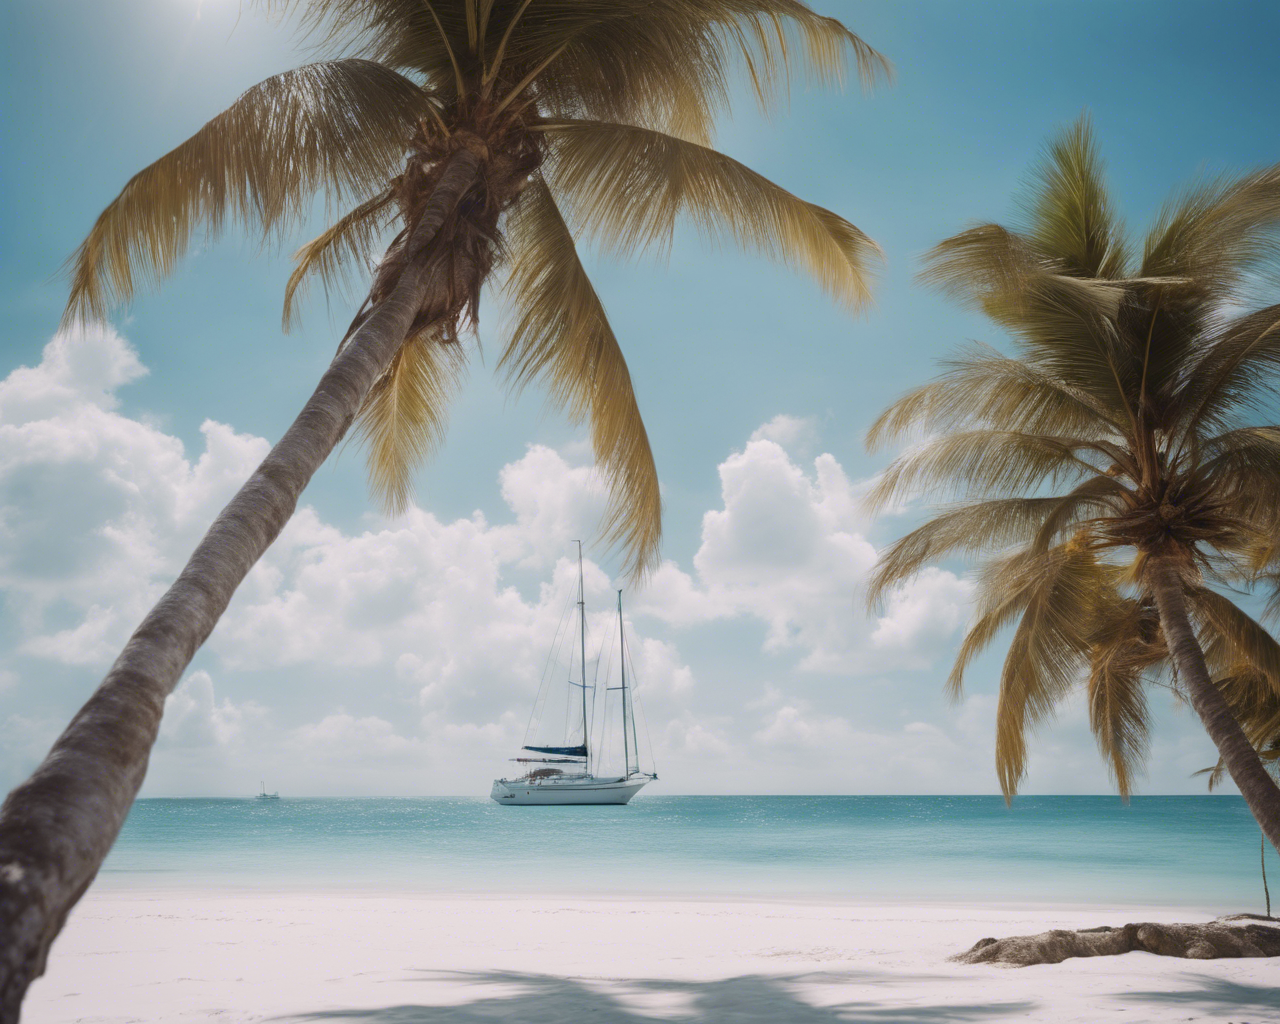 AI image of palm trees and beach